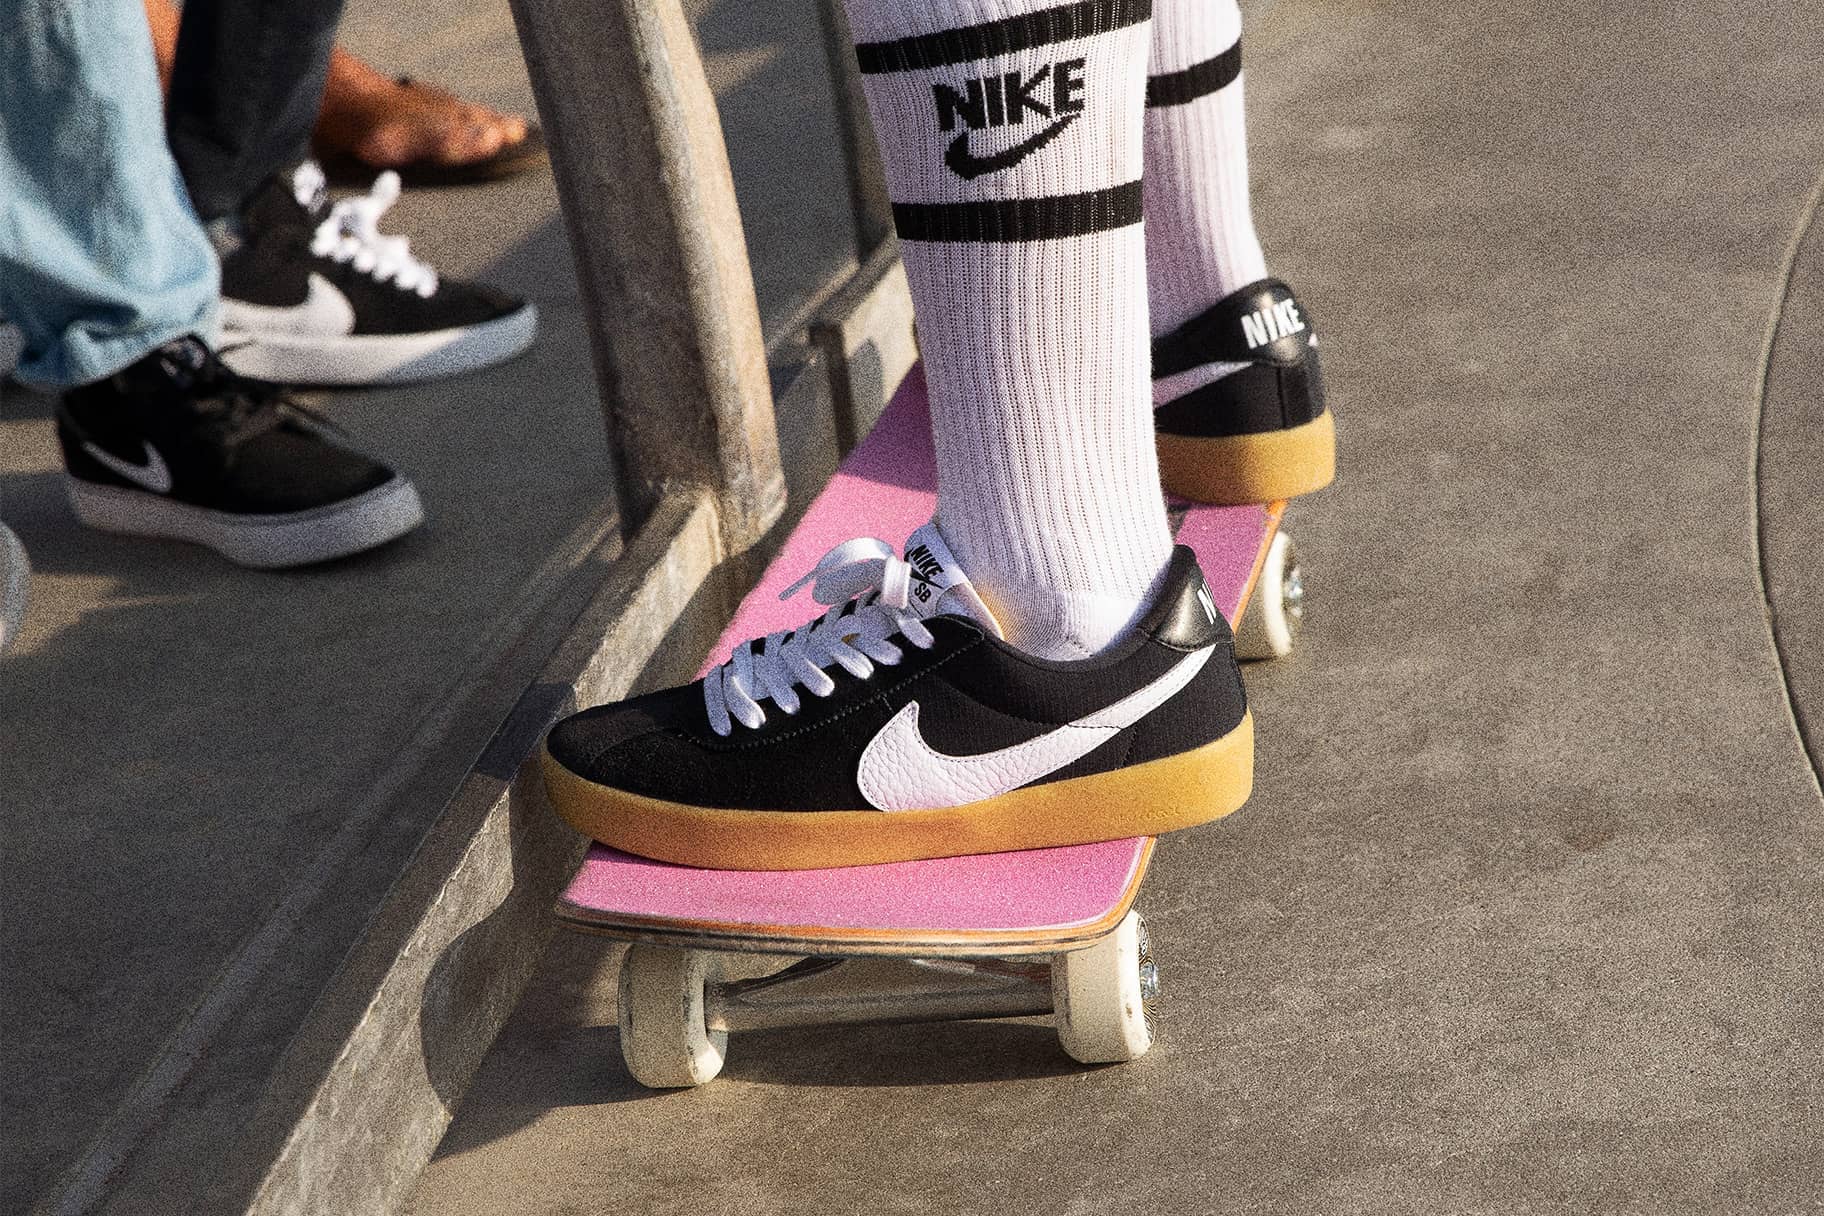 Les meilleures chaussures Nike pour le skateboard. Nike CH